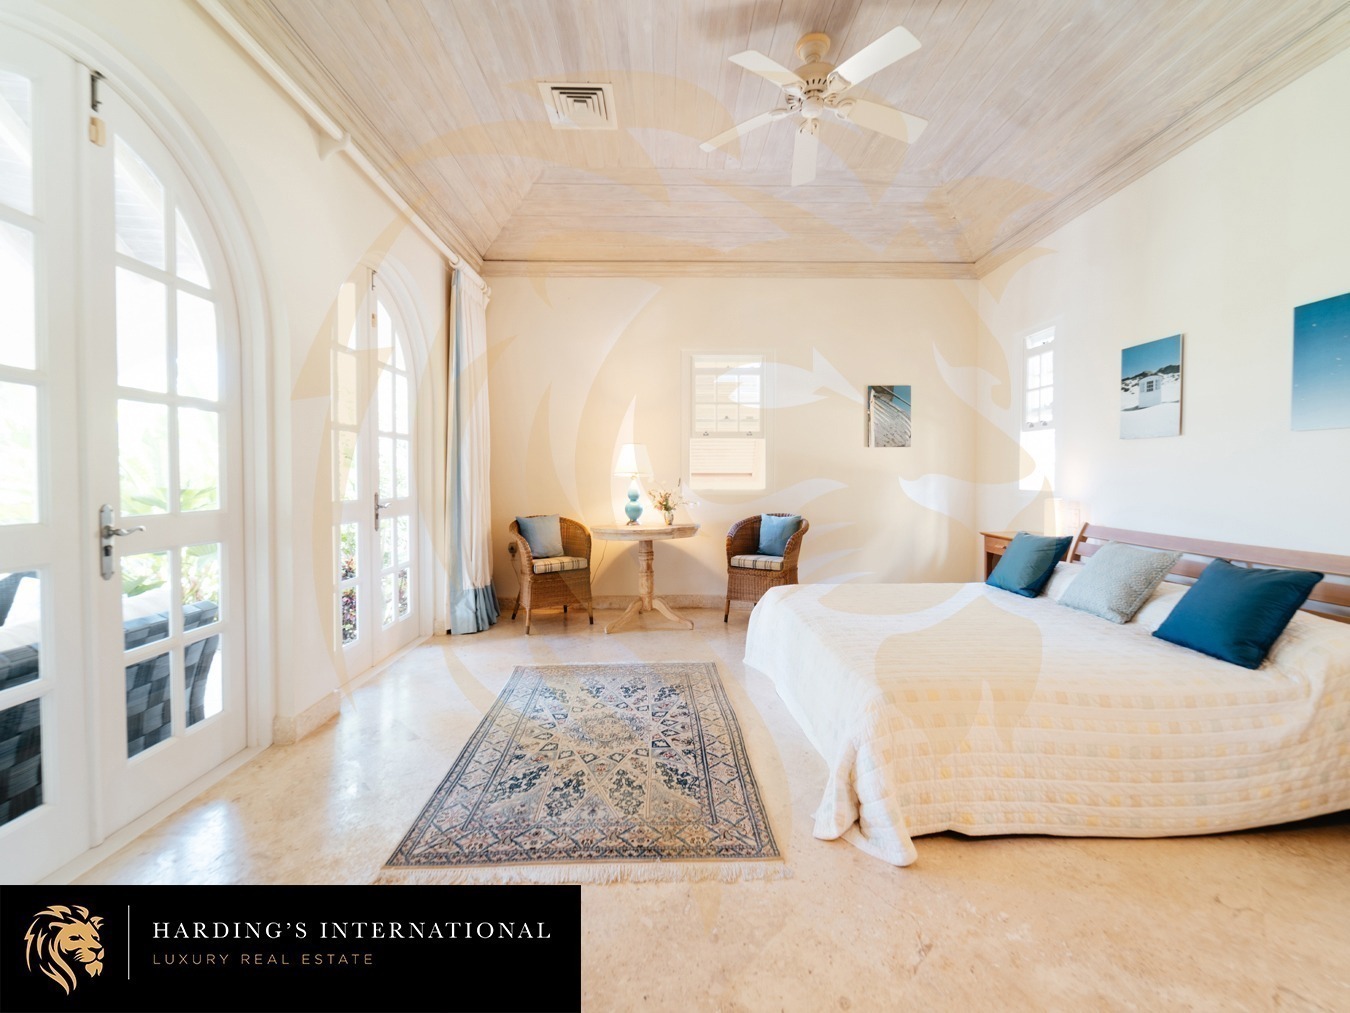 Shamal Royal Westmoreland Barbados Harding's International Real Estate